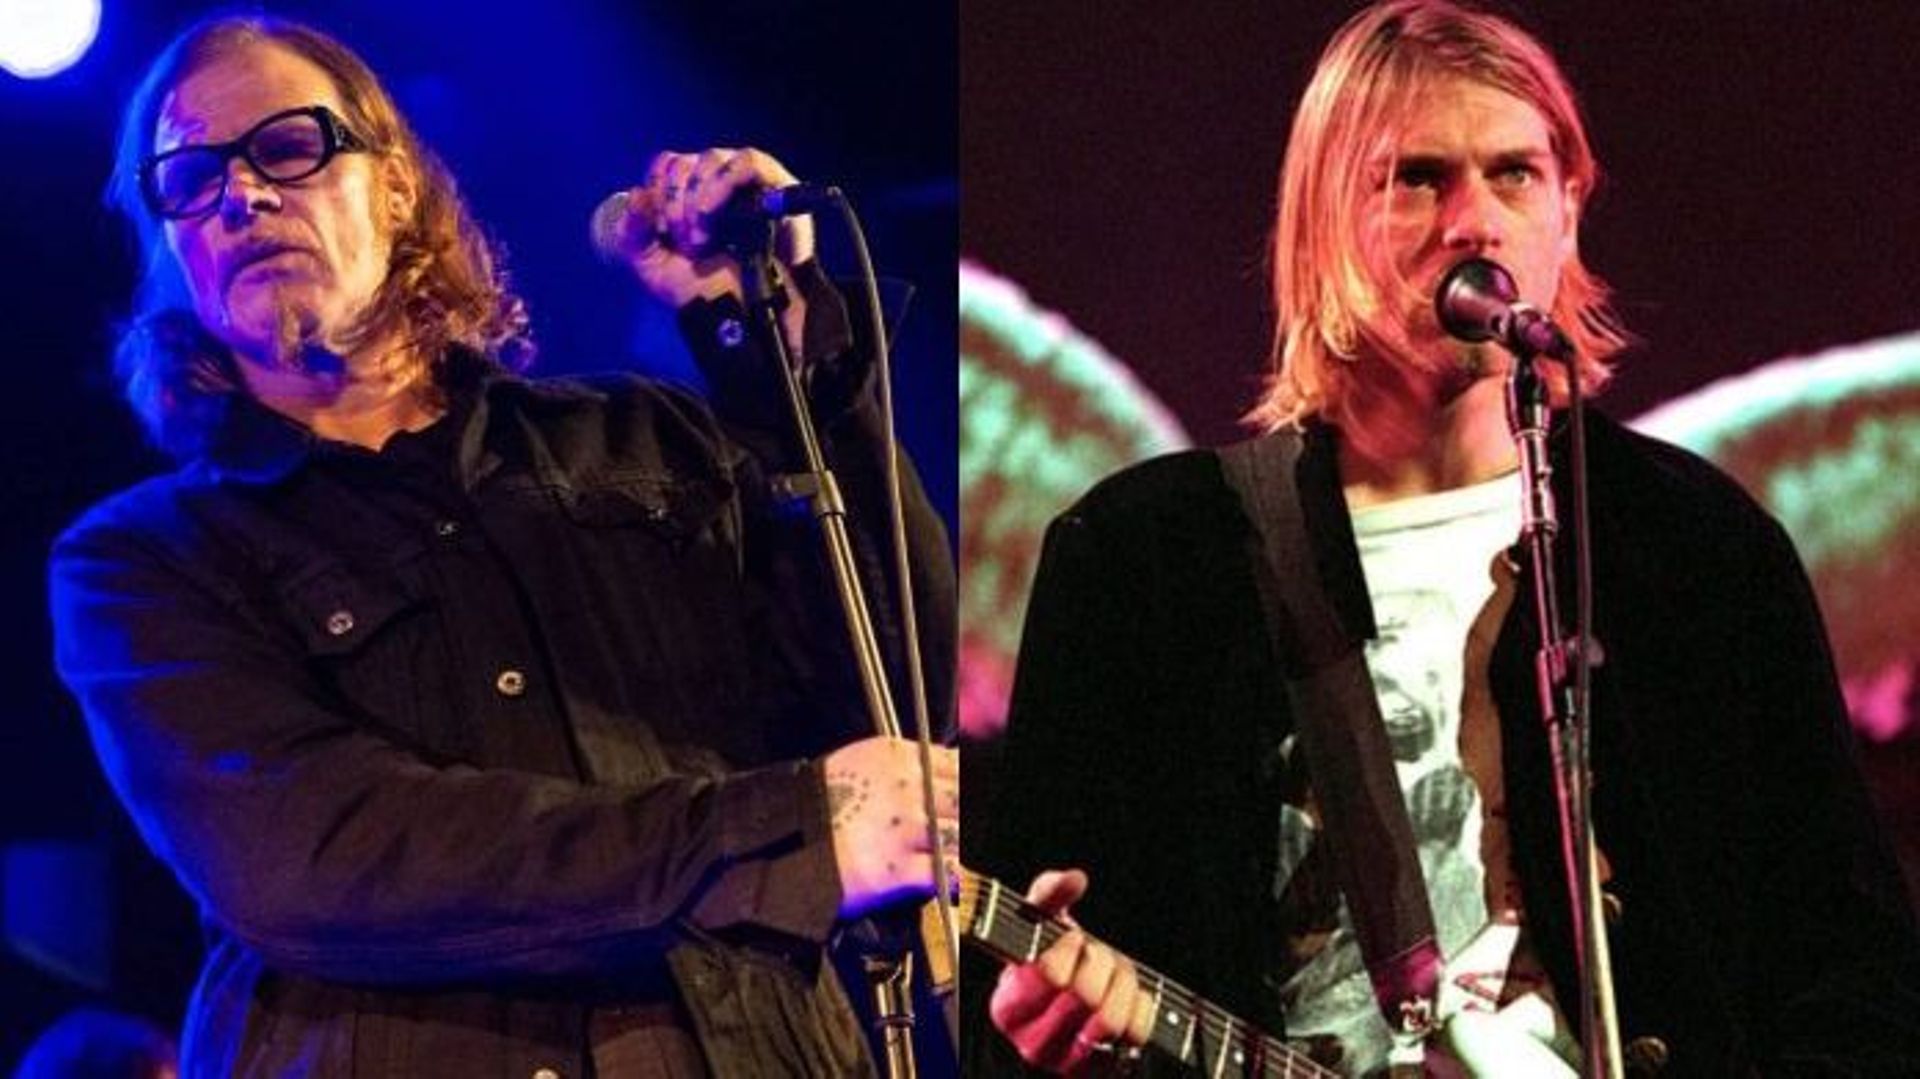 Mark Lanegan / Kurt Cobain